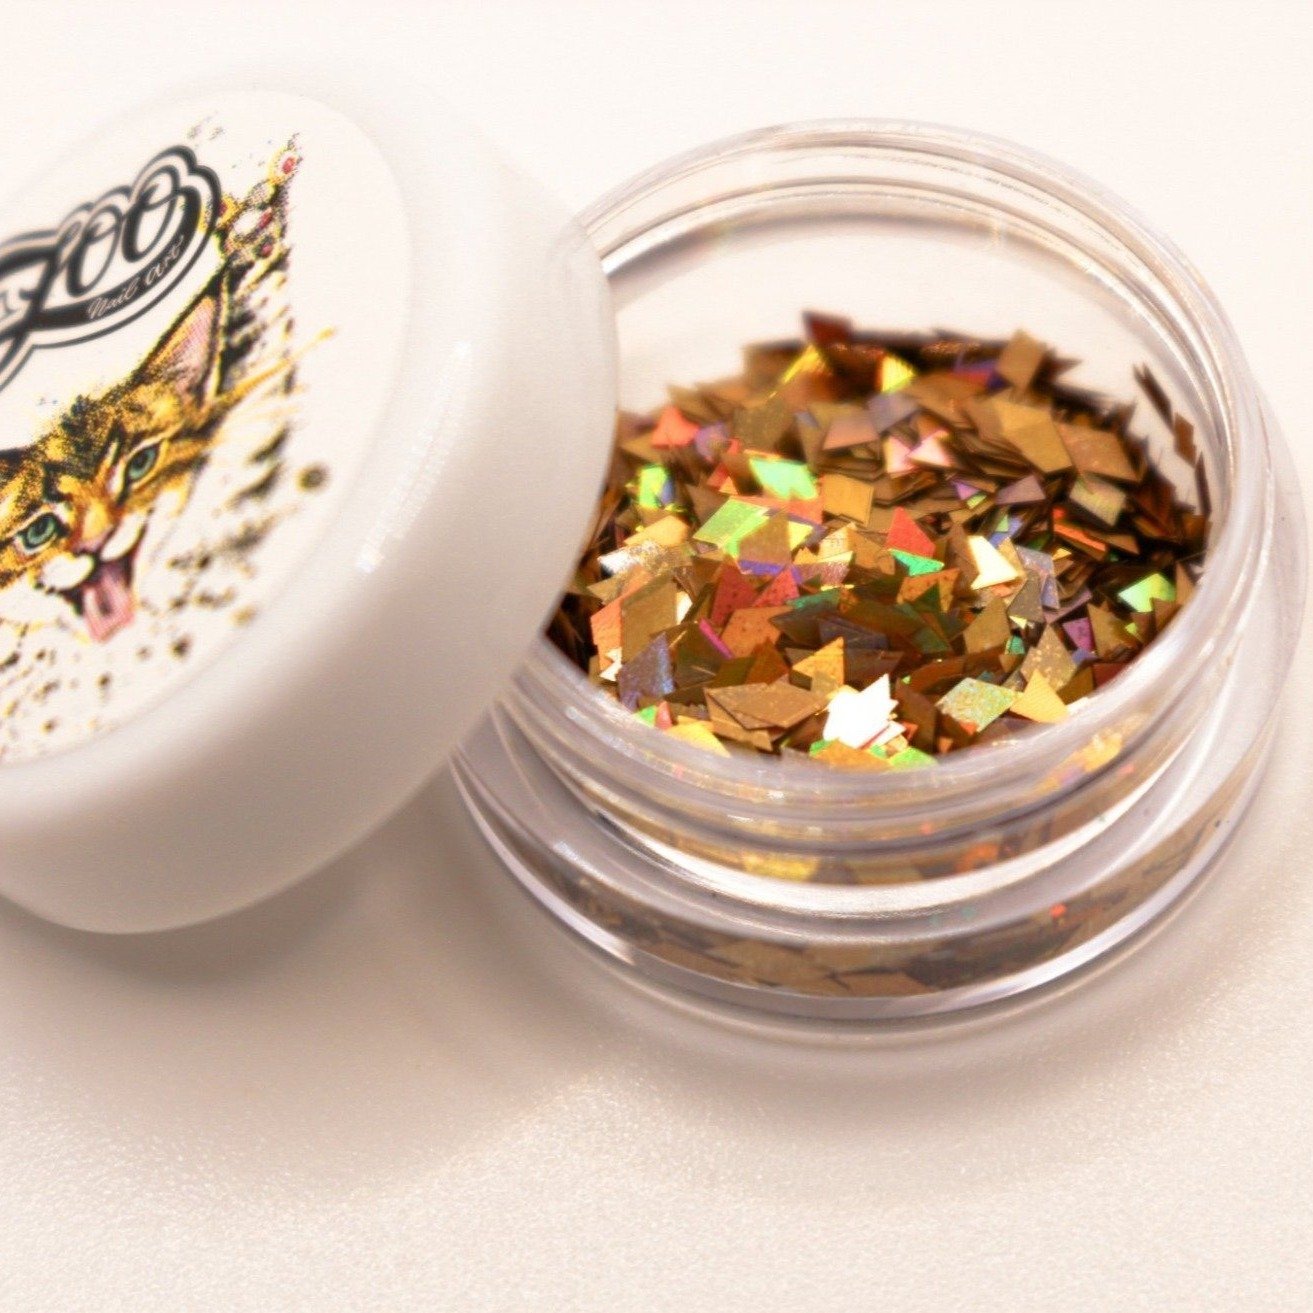 1440pcs Glitter Flatback Rhinestones Glass Crystal Gems For Nails Makeup  Clothes – Tacos Y Mas